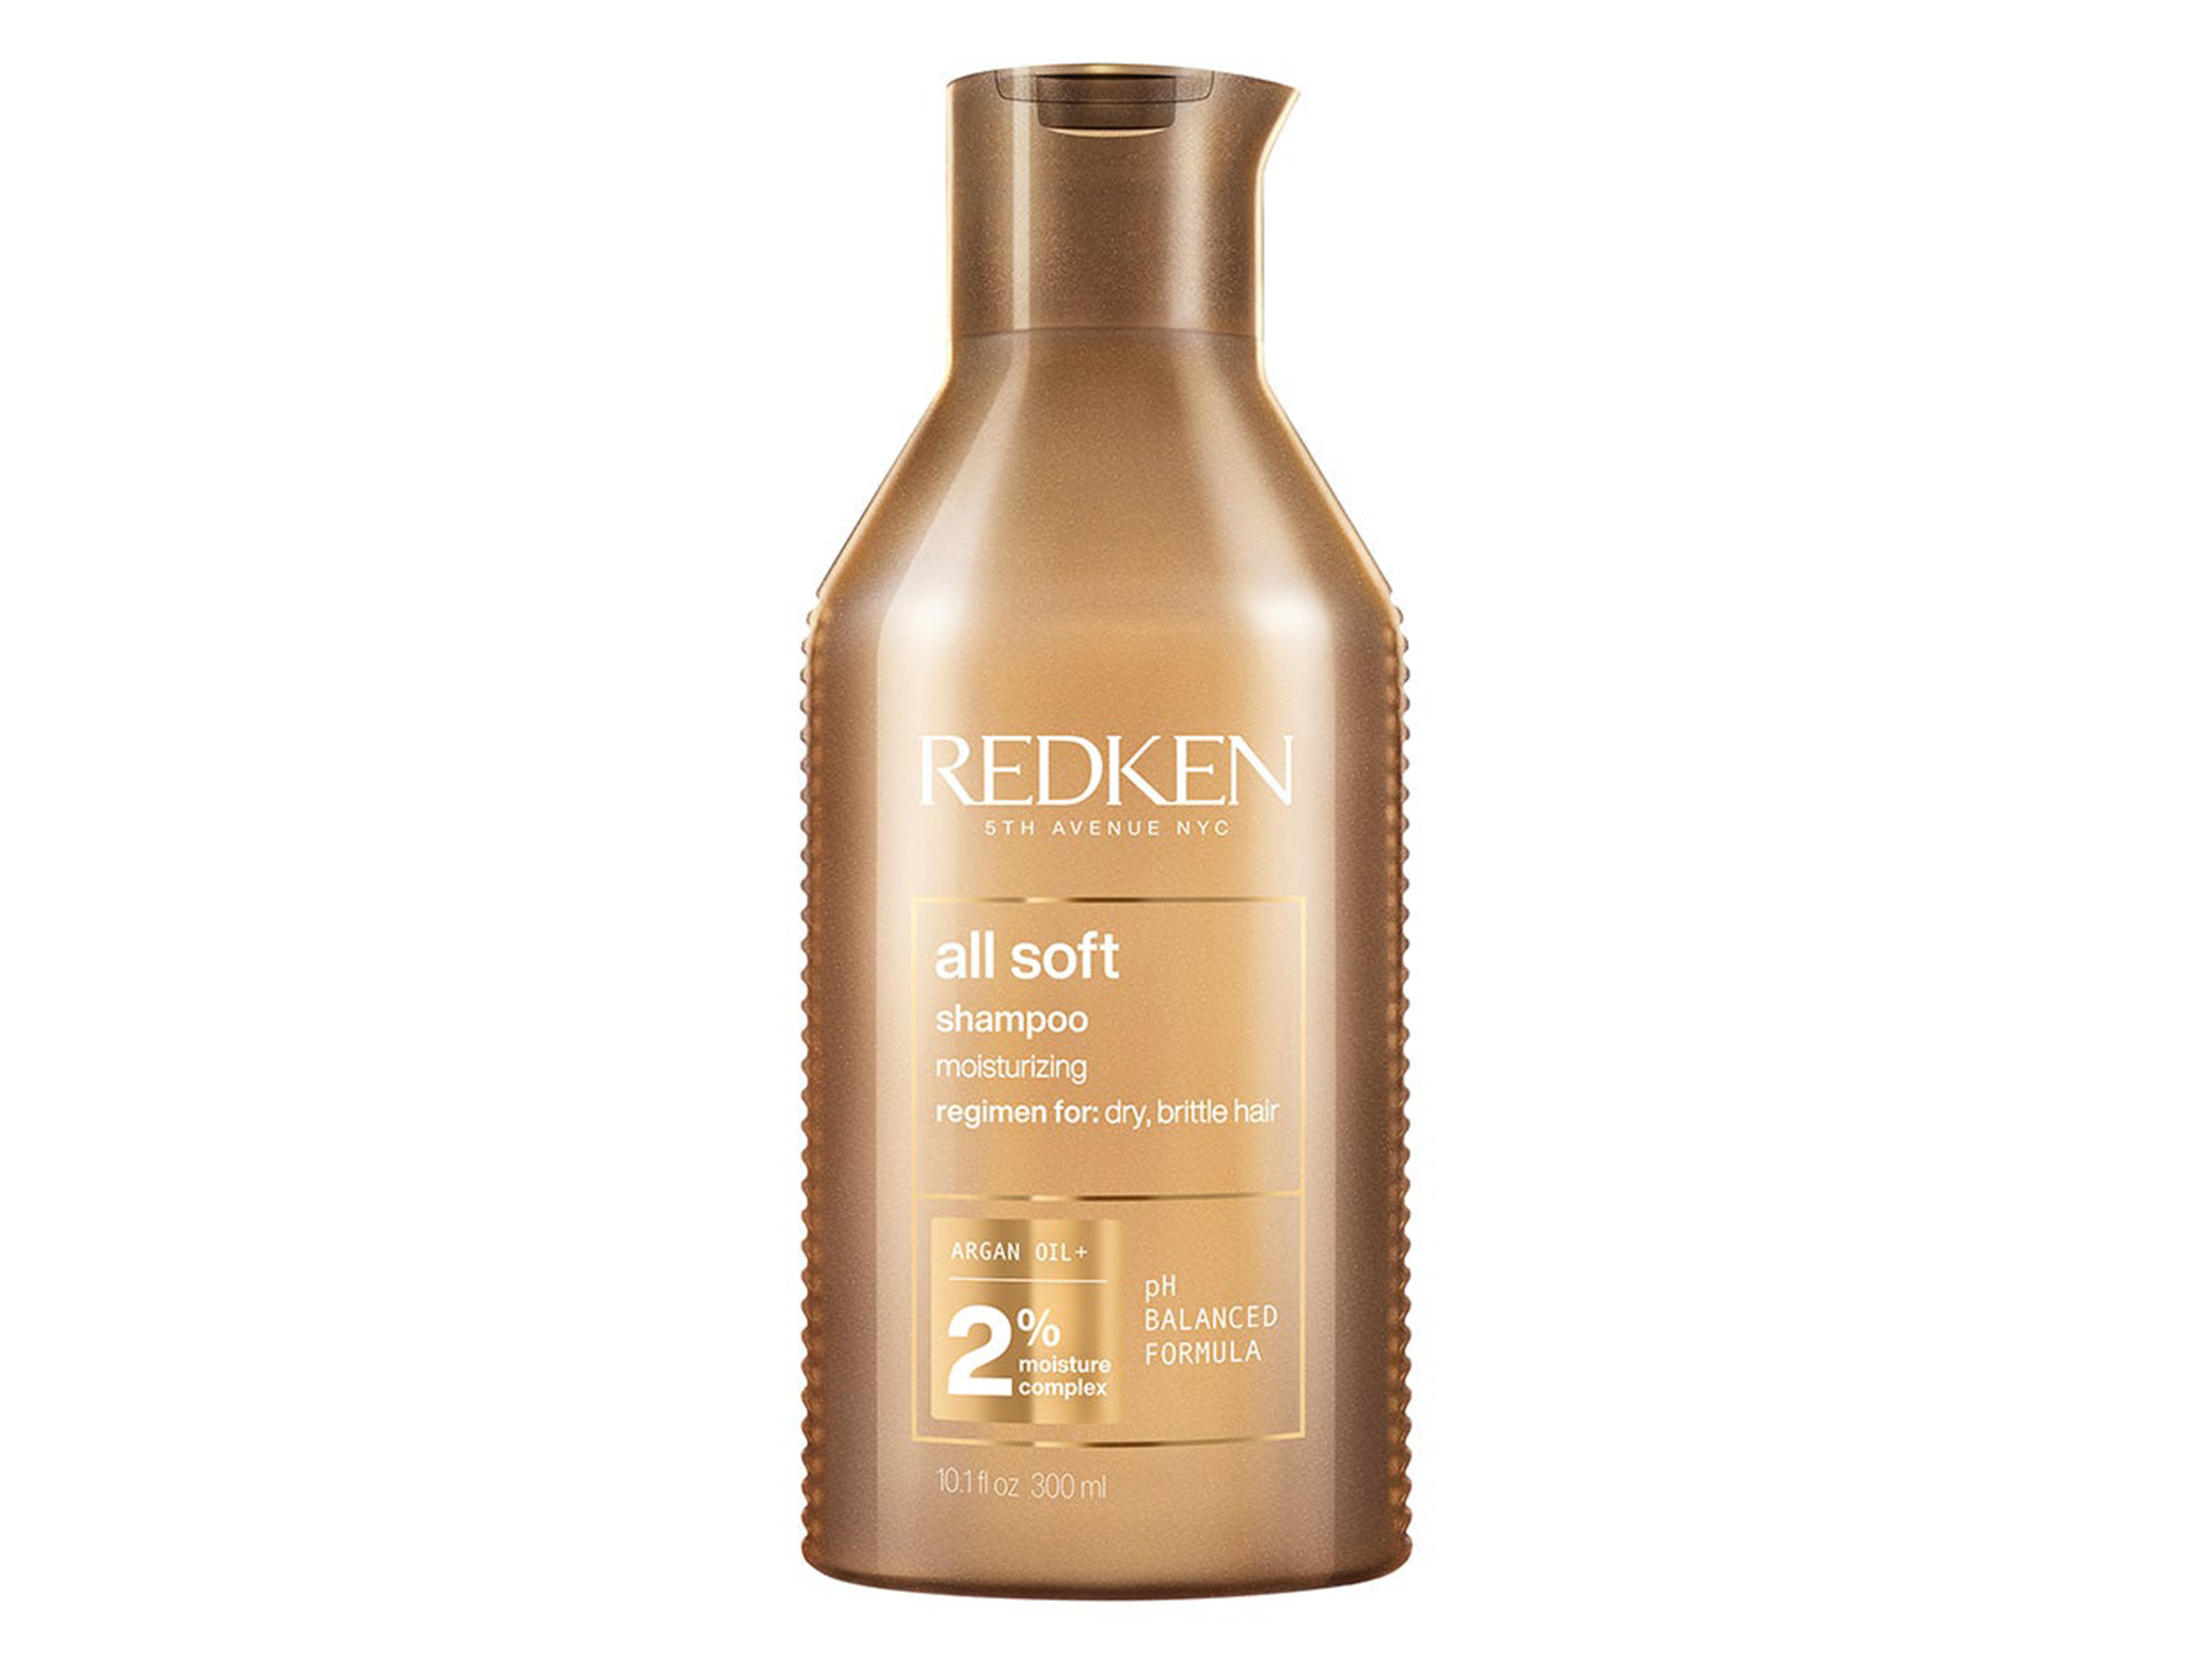 Redken All Soft Shampoo, 300 ml